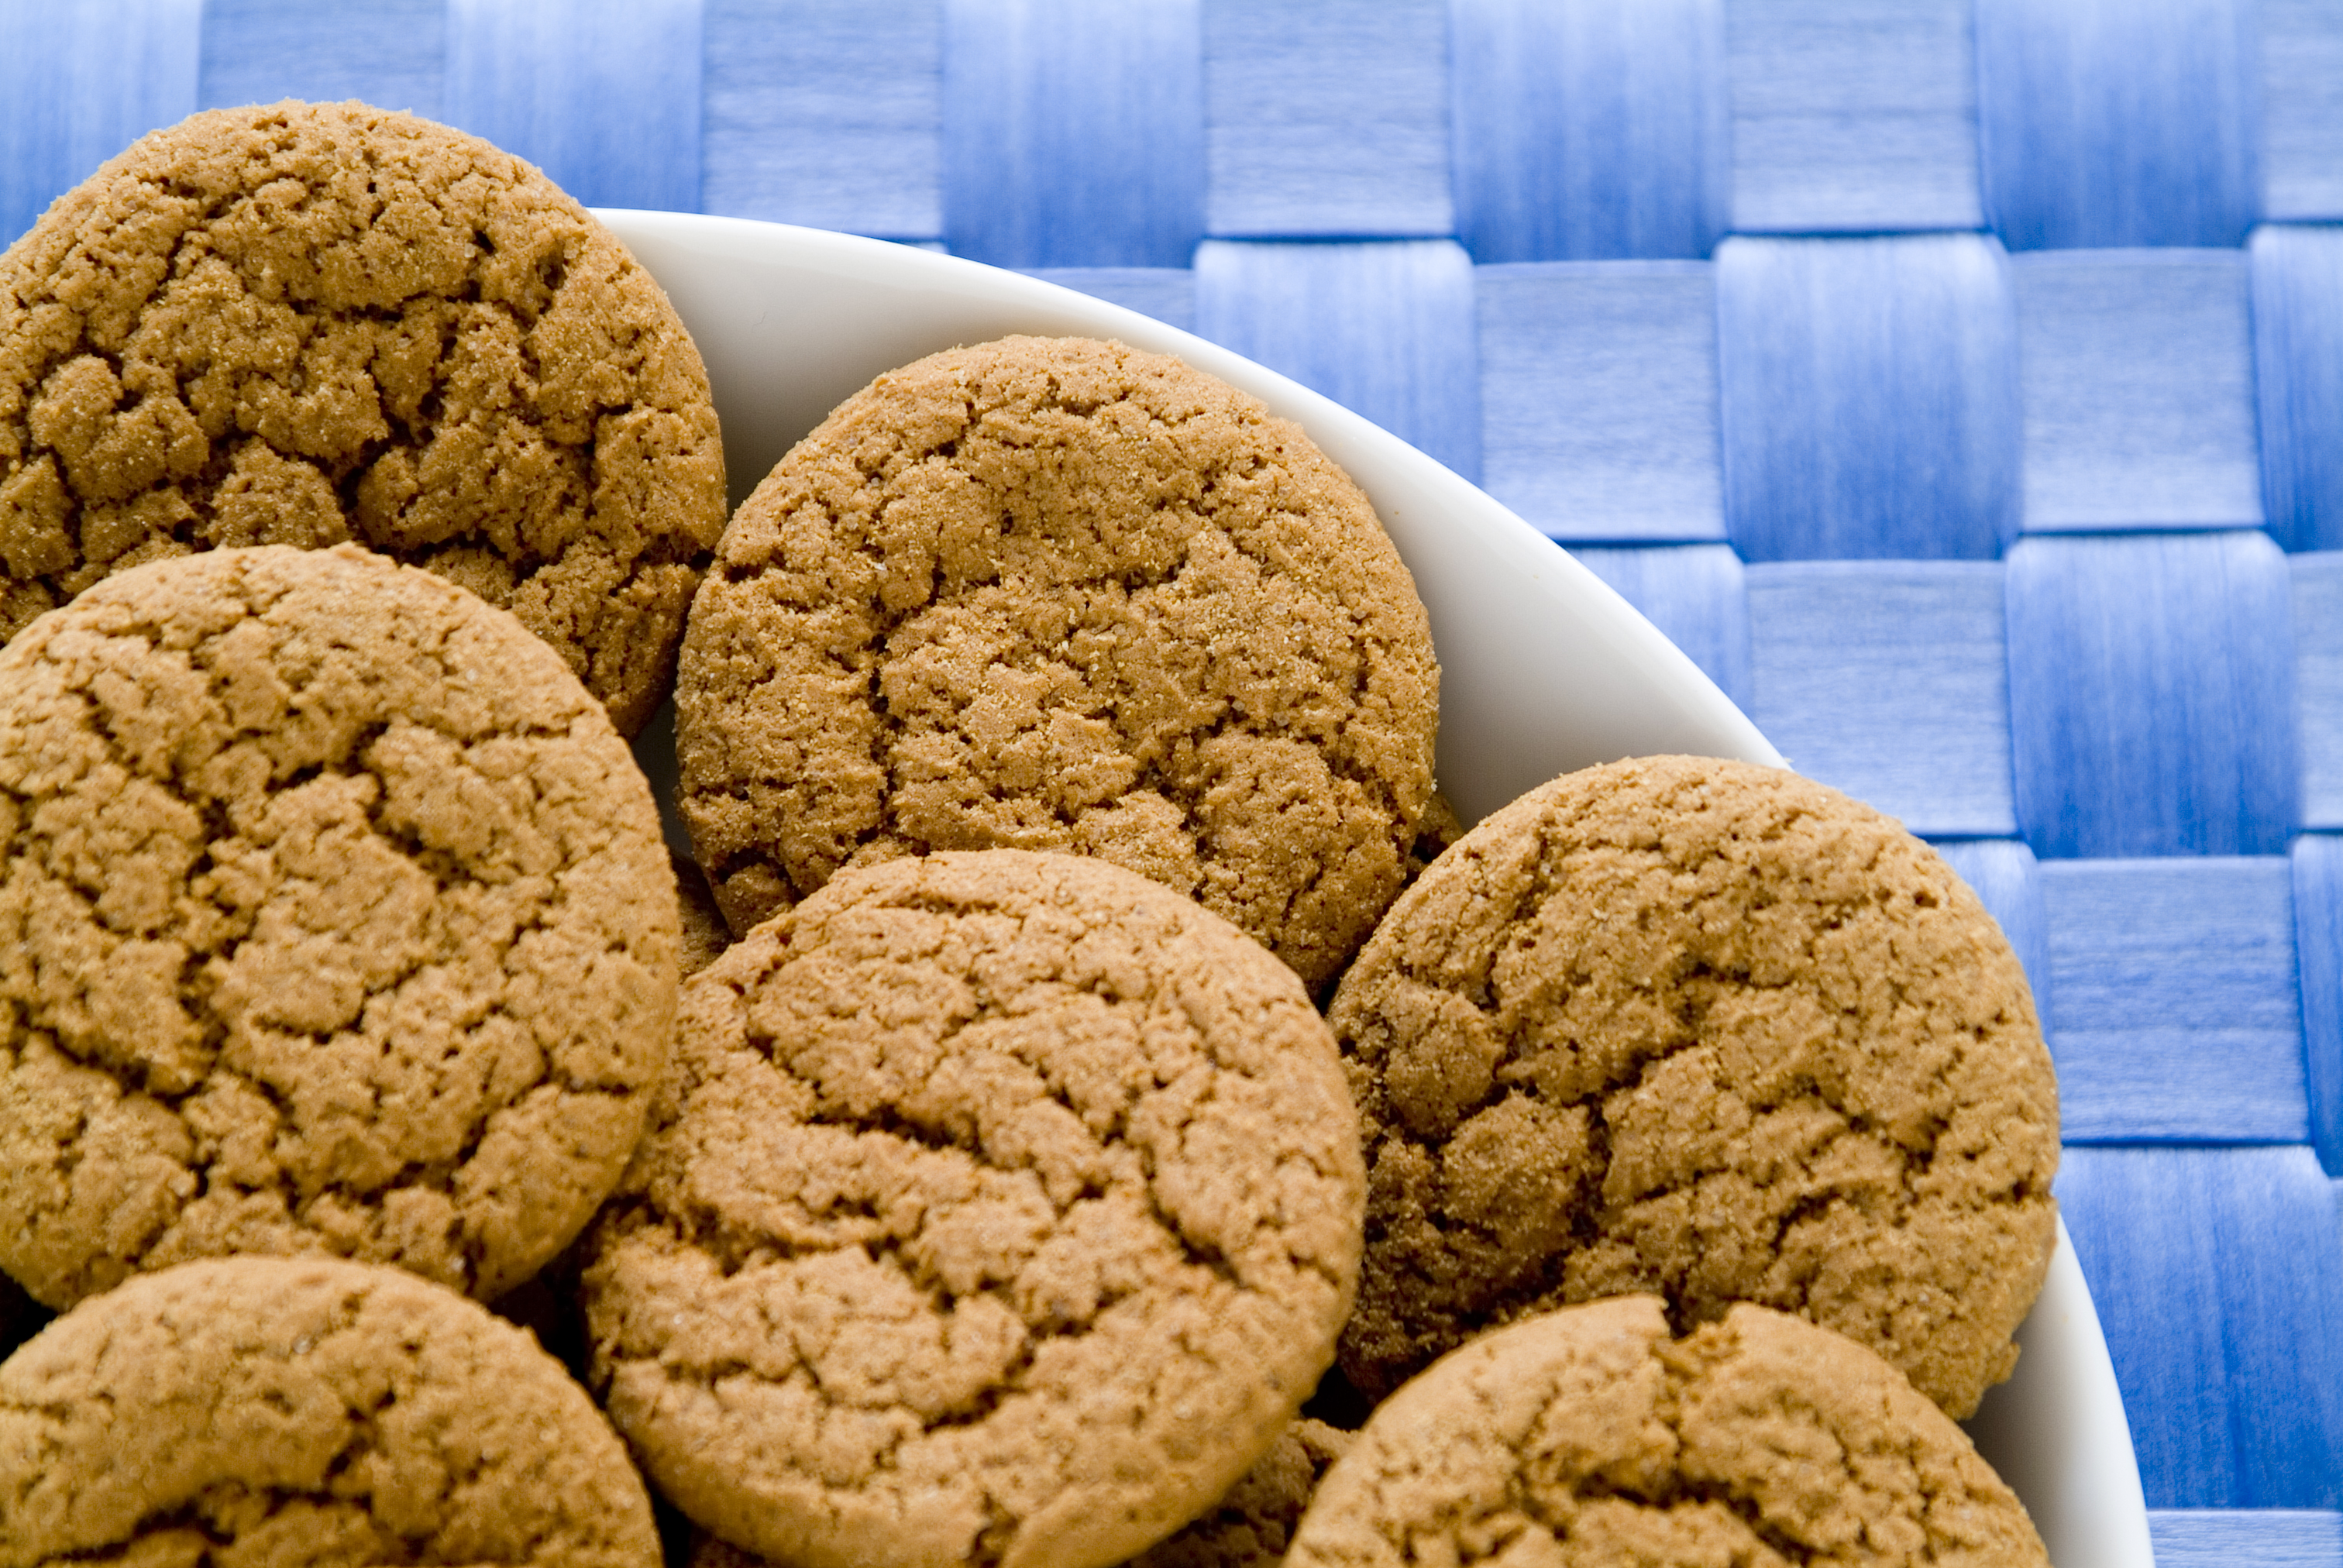 5. Molasses Cookies